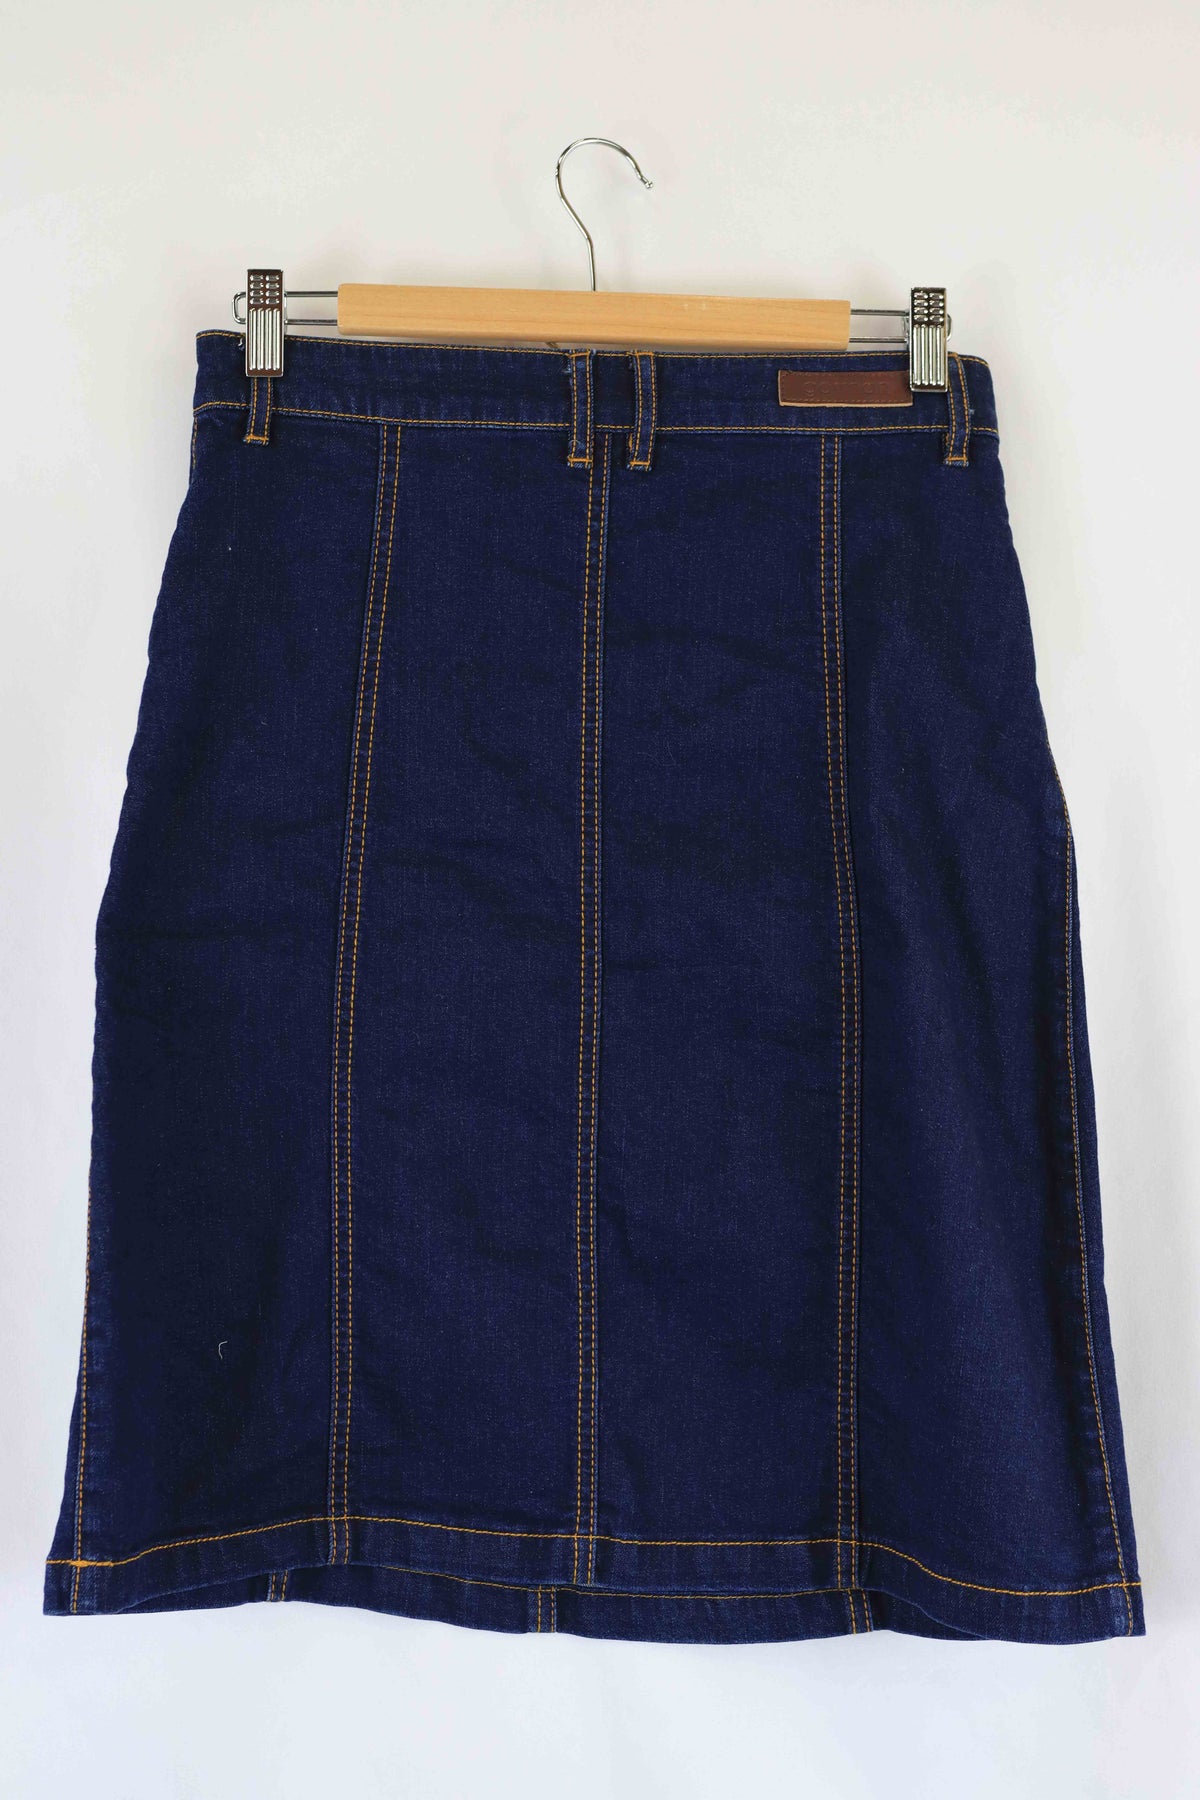 Gorman Blue Denim Skirt 10